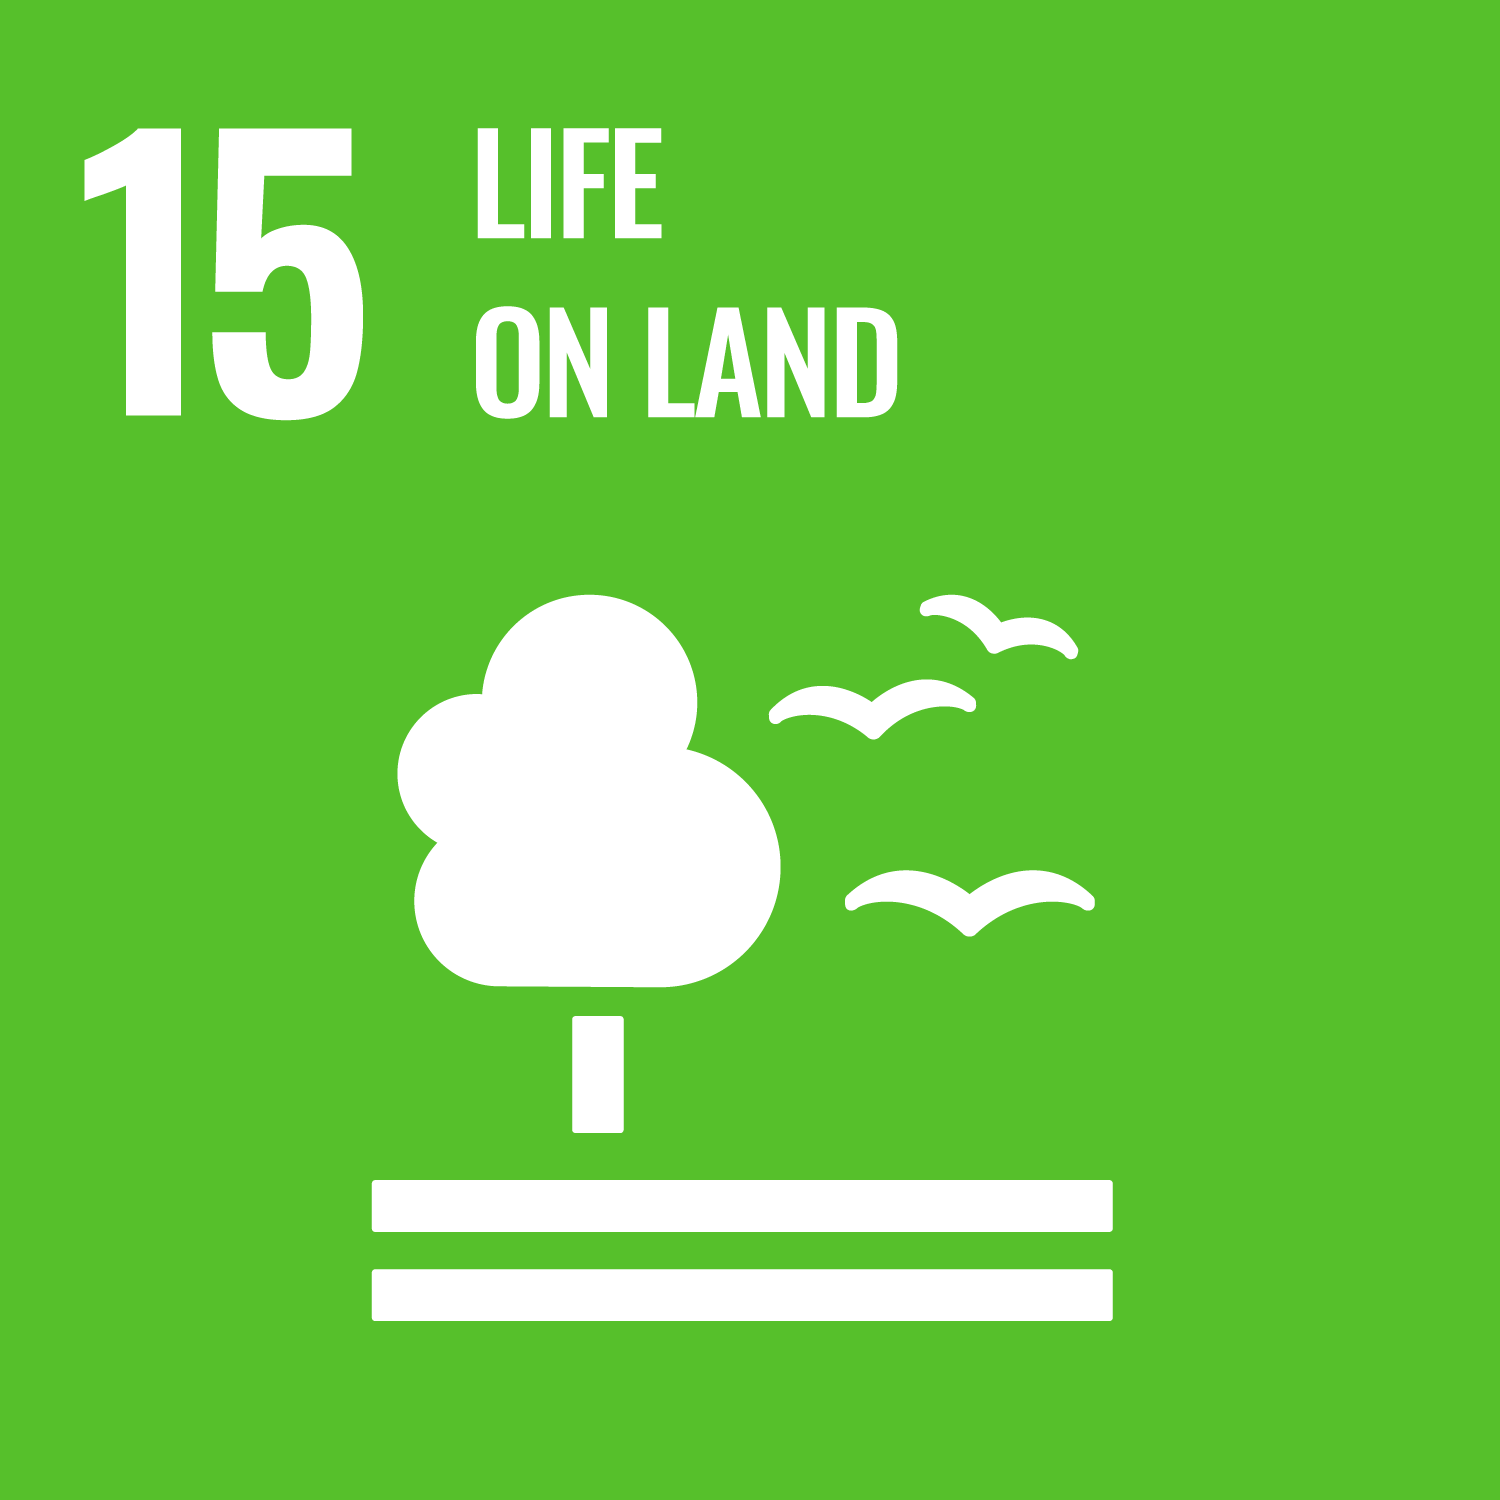 SDG 15, Life on land